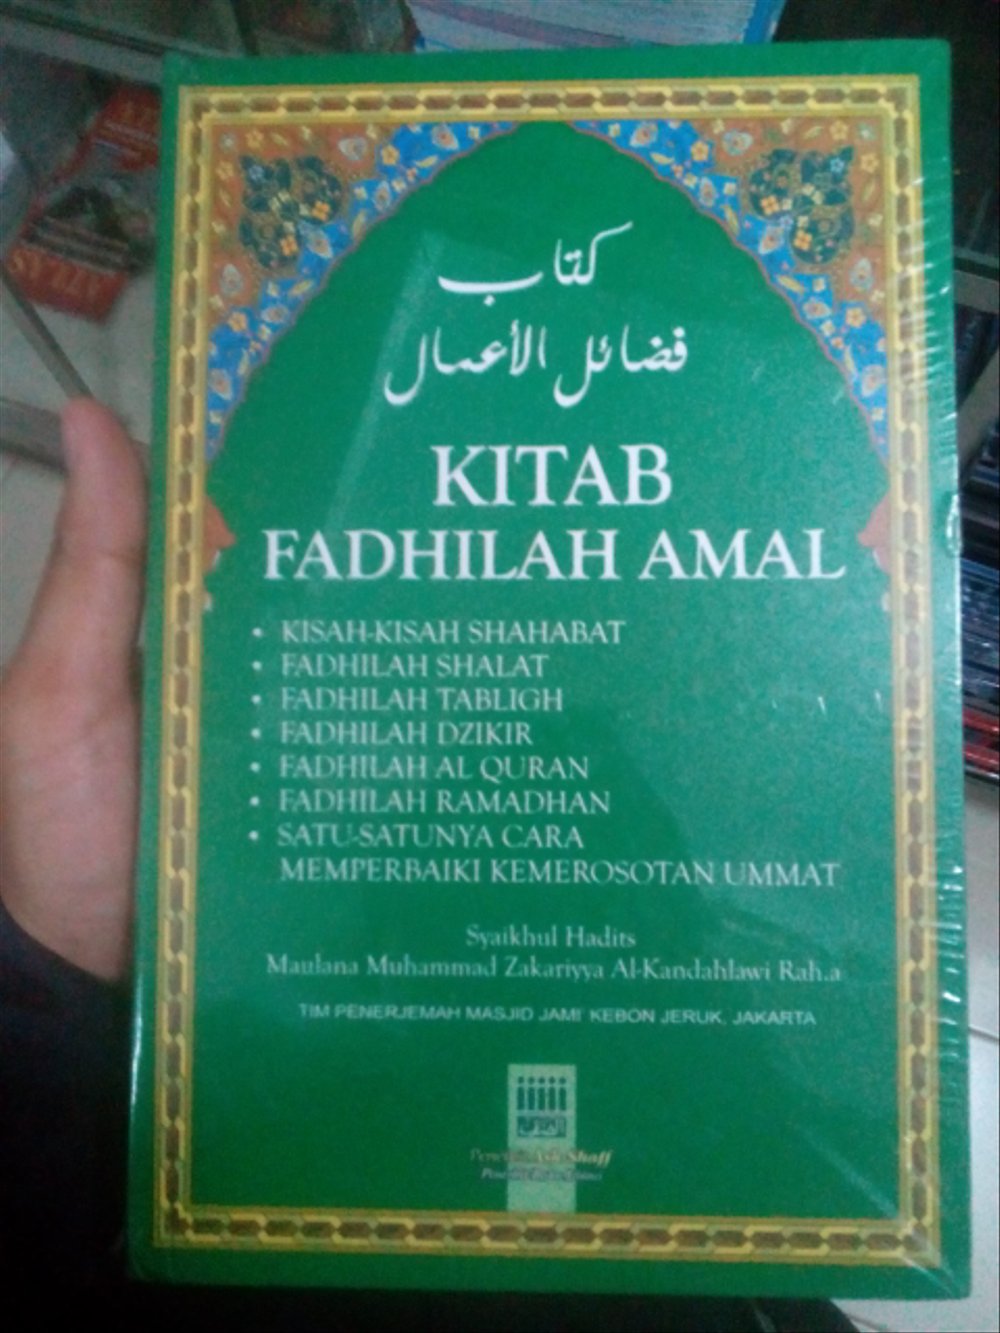 Fadhail amal indonesia pdf